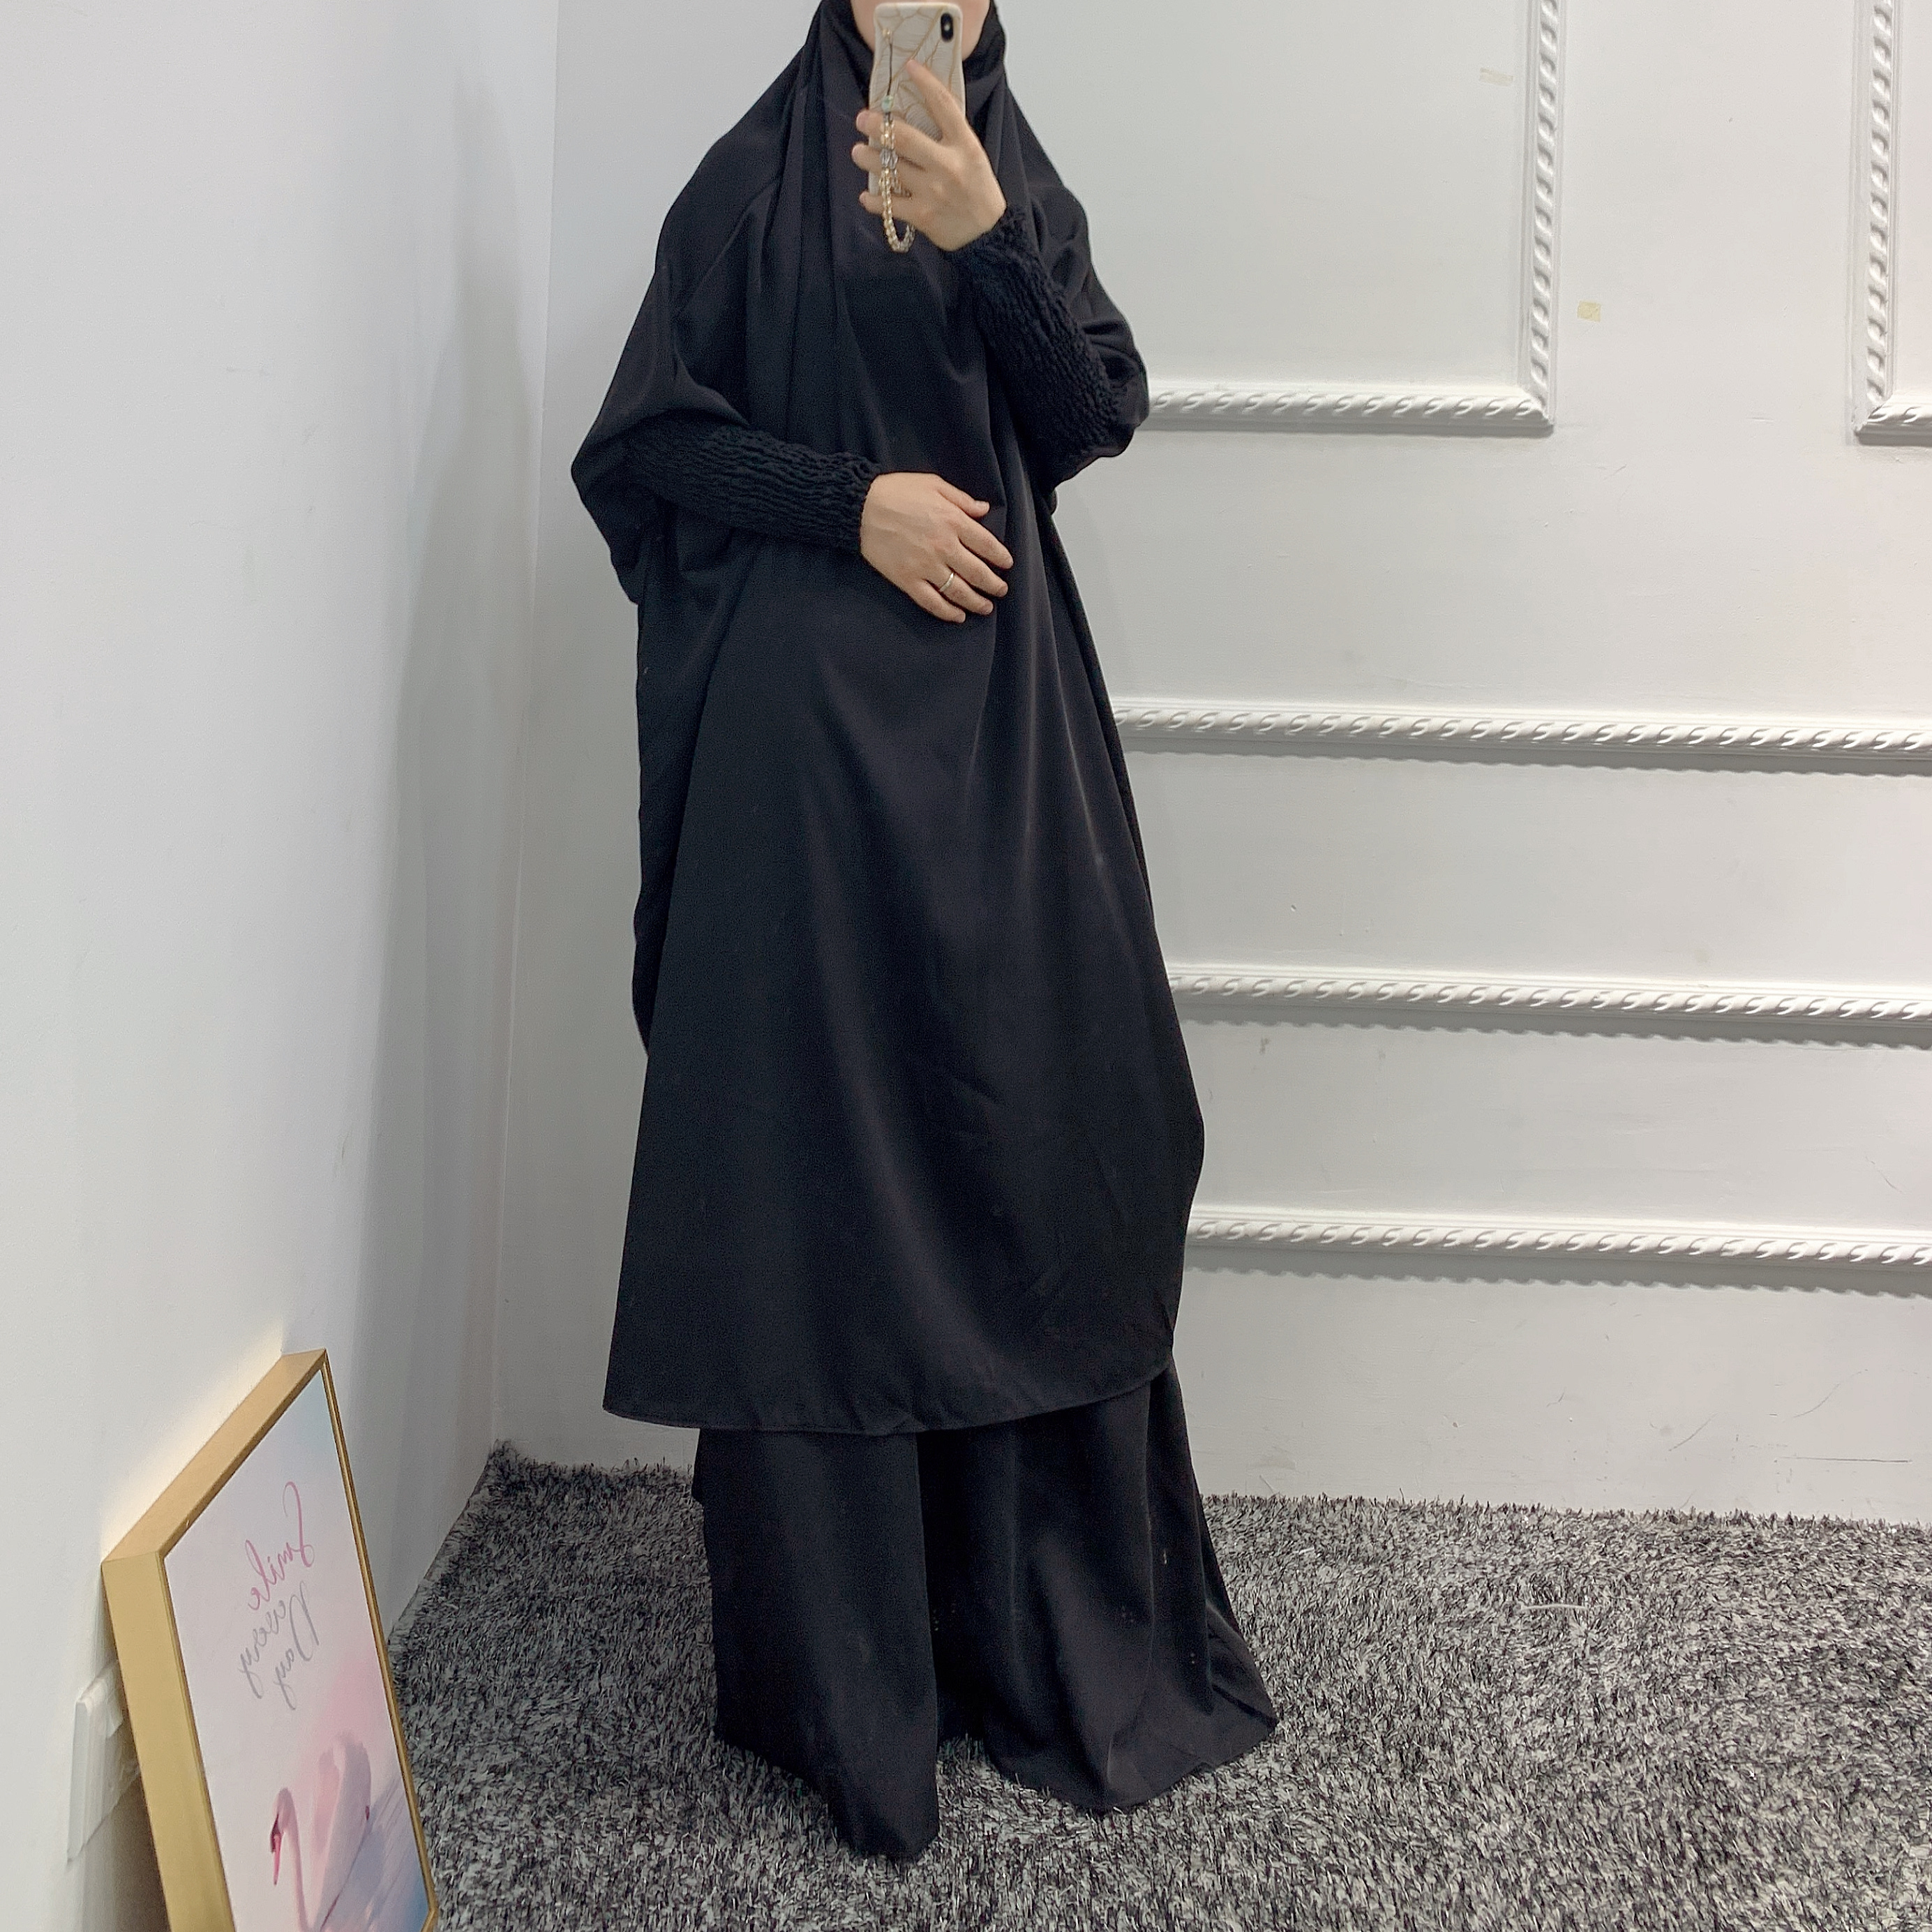 New arrival muslim women long maxi dress chiffon Ramadan islamic clothing Dubai party evening abayas